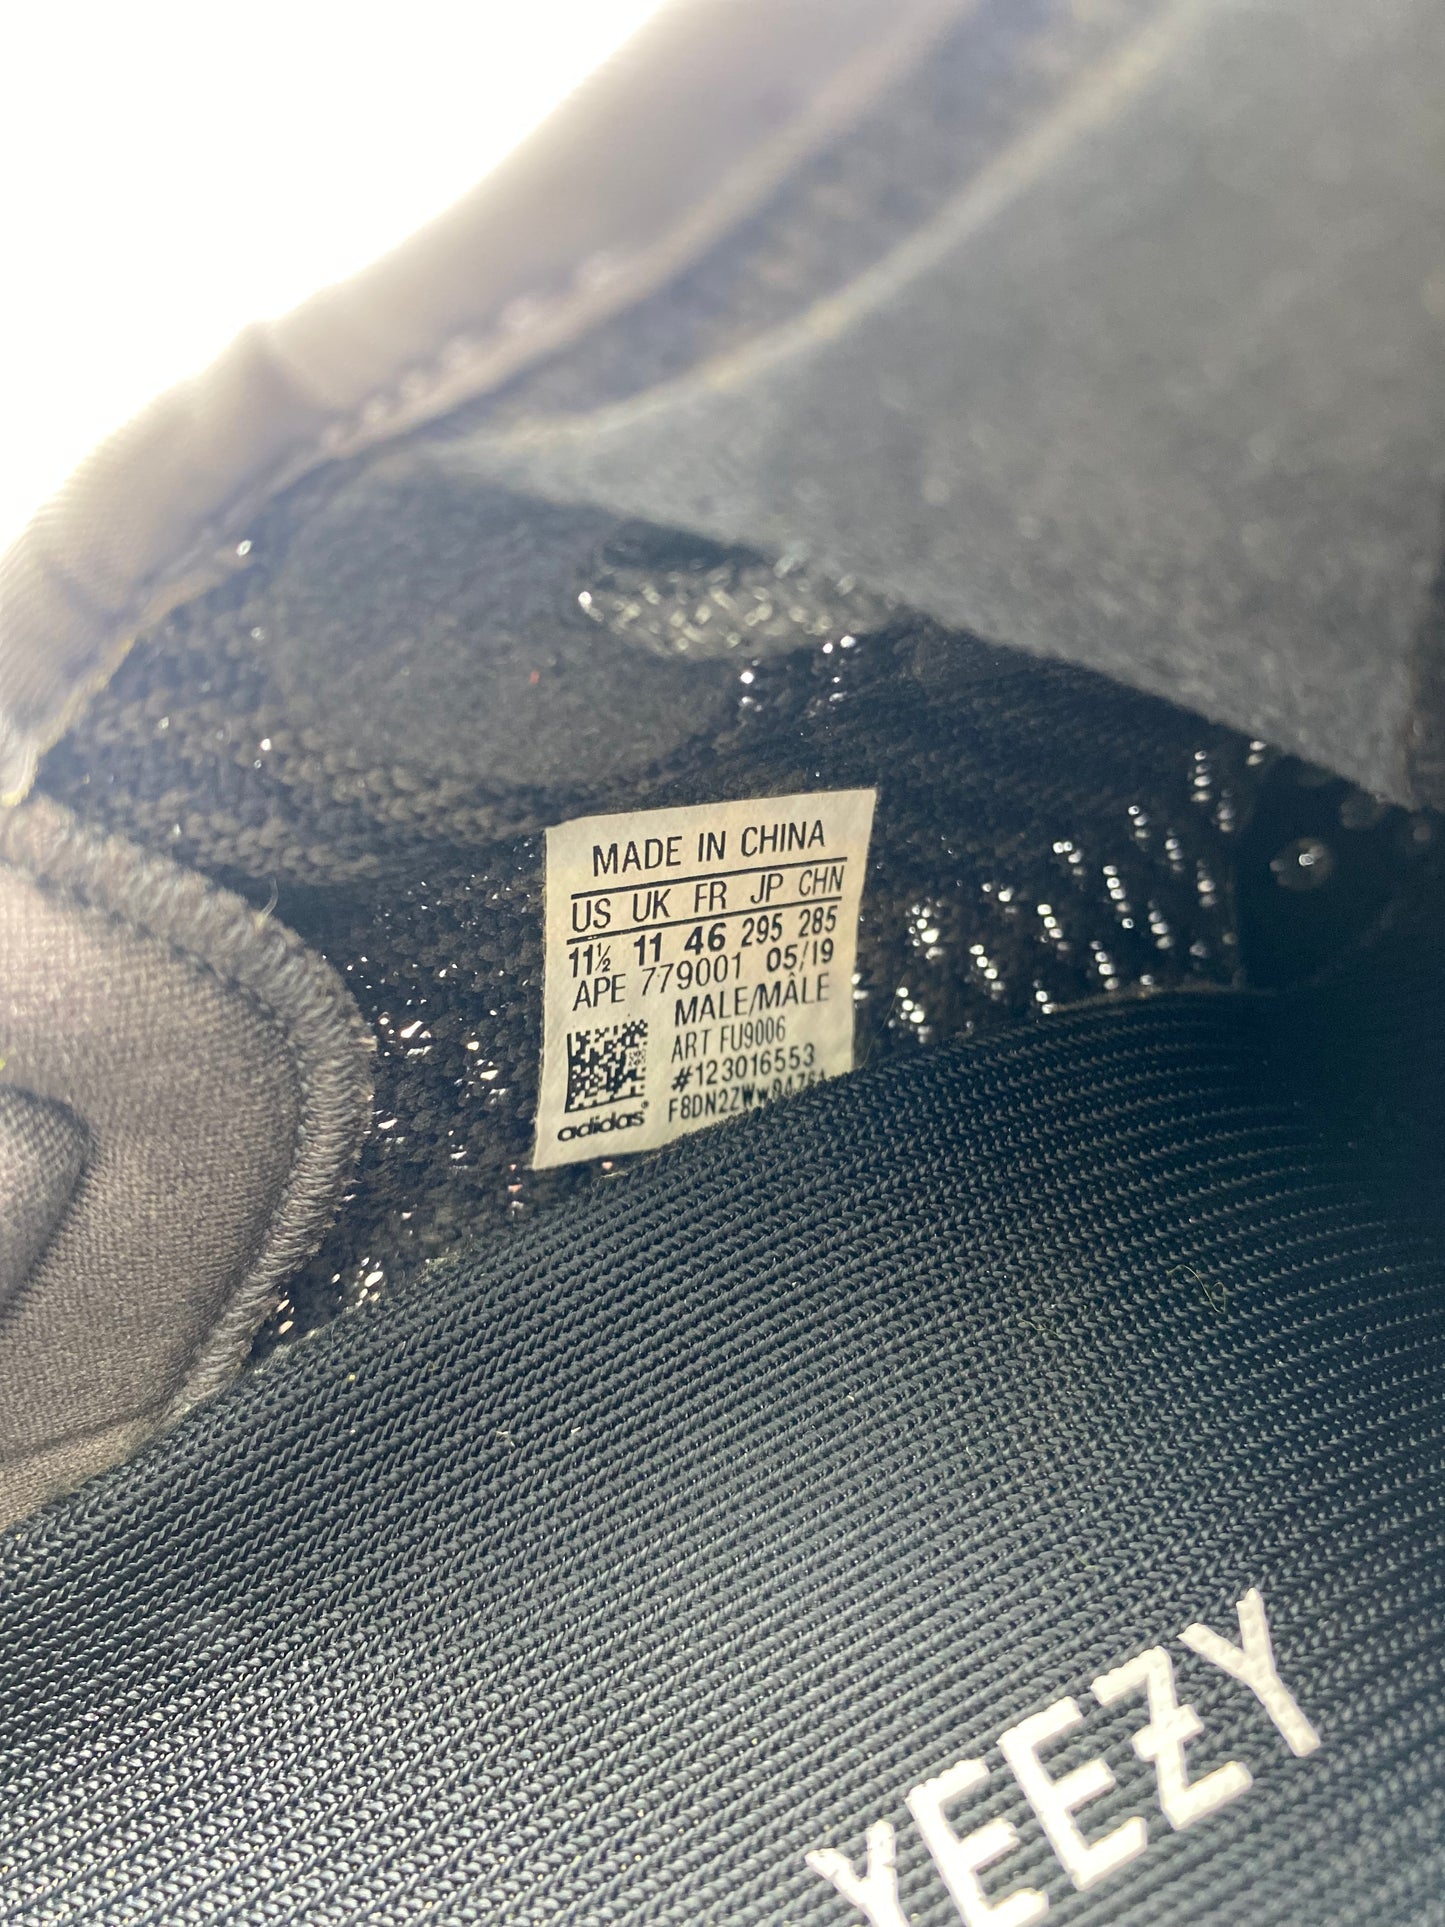 Champion Adidas Yeezy Boost 350 V2 (Masc US 11.5)